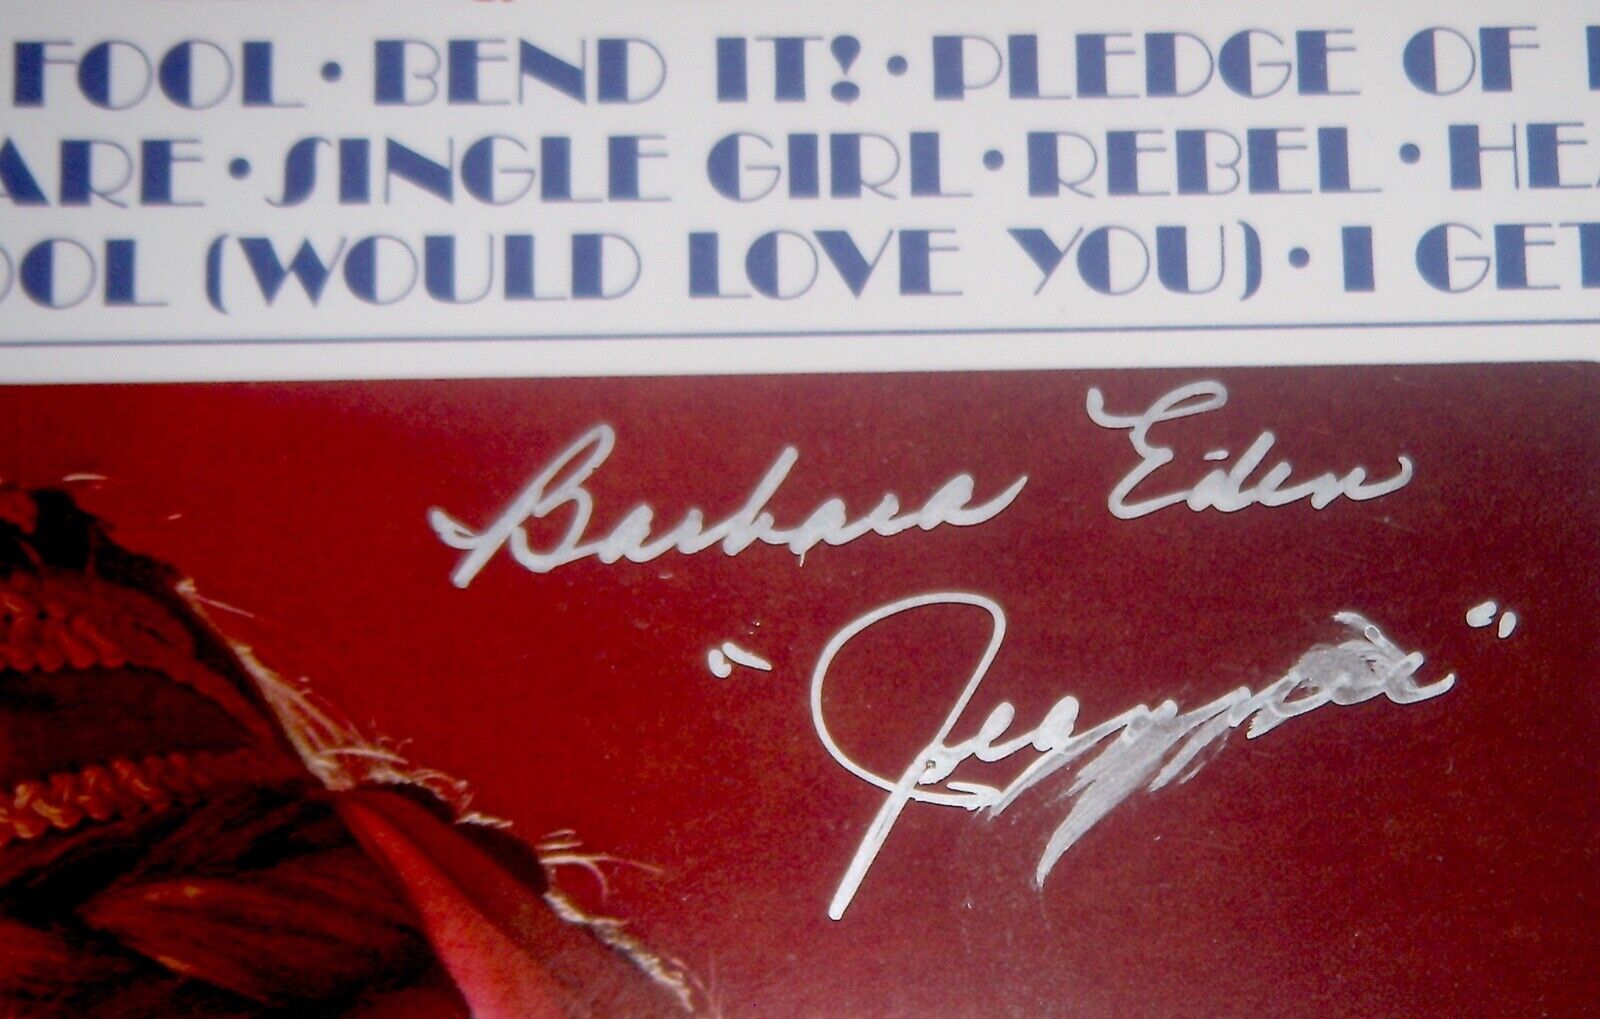 Miss Barbara Eden ***Pink Colored Vinyl LP - Autographed by Barbara Eden